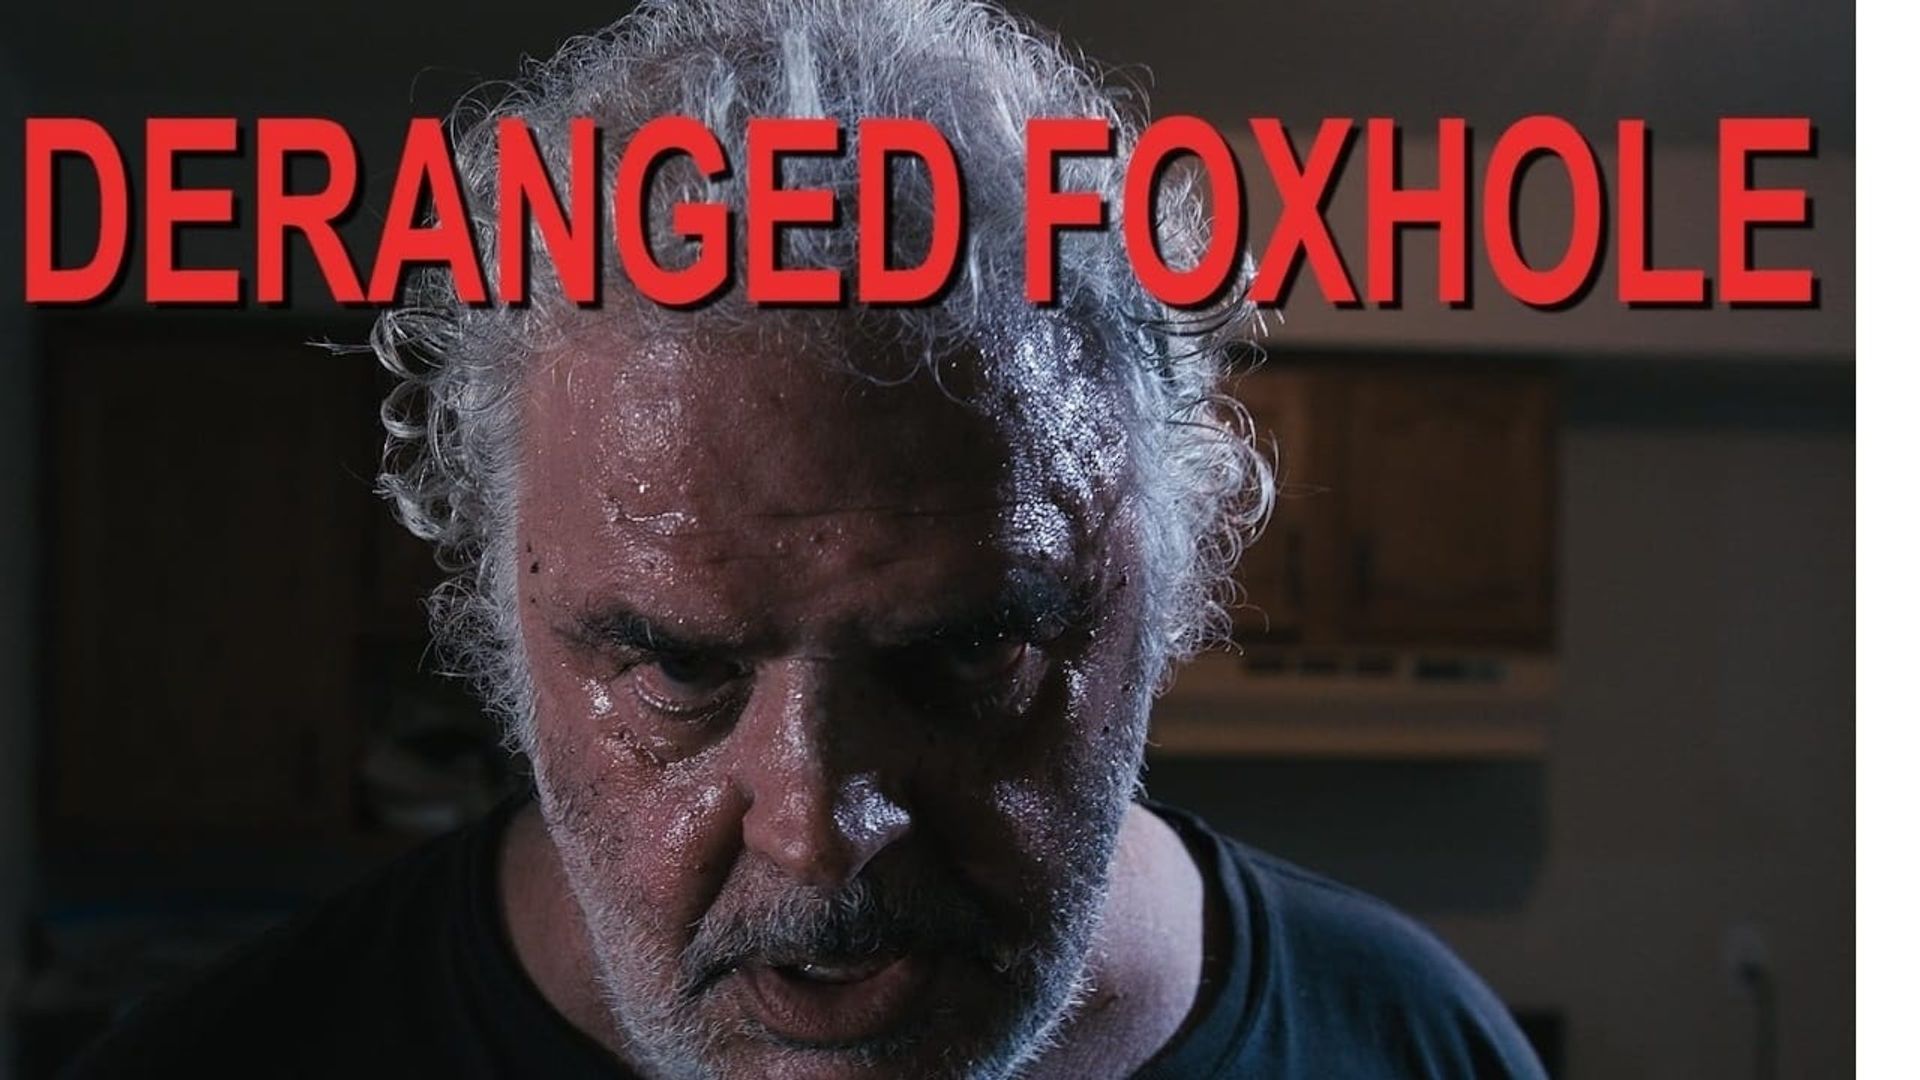 Deranged Foxhole Deduction background